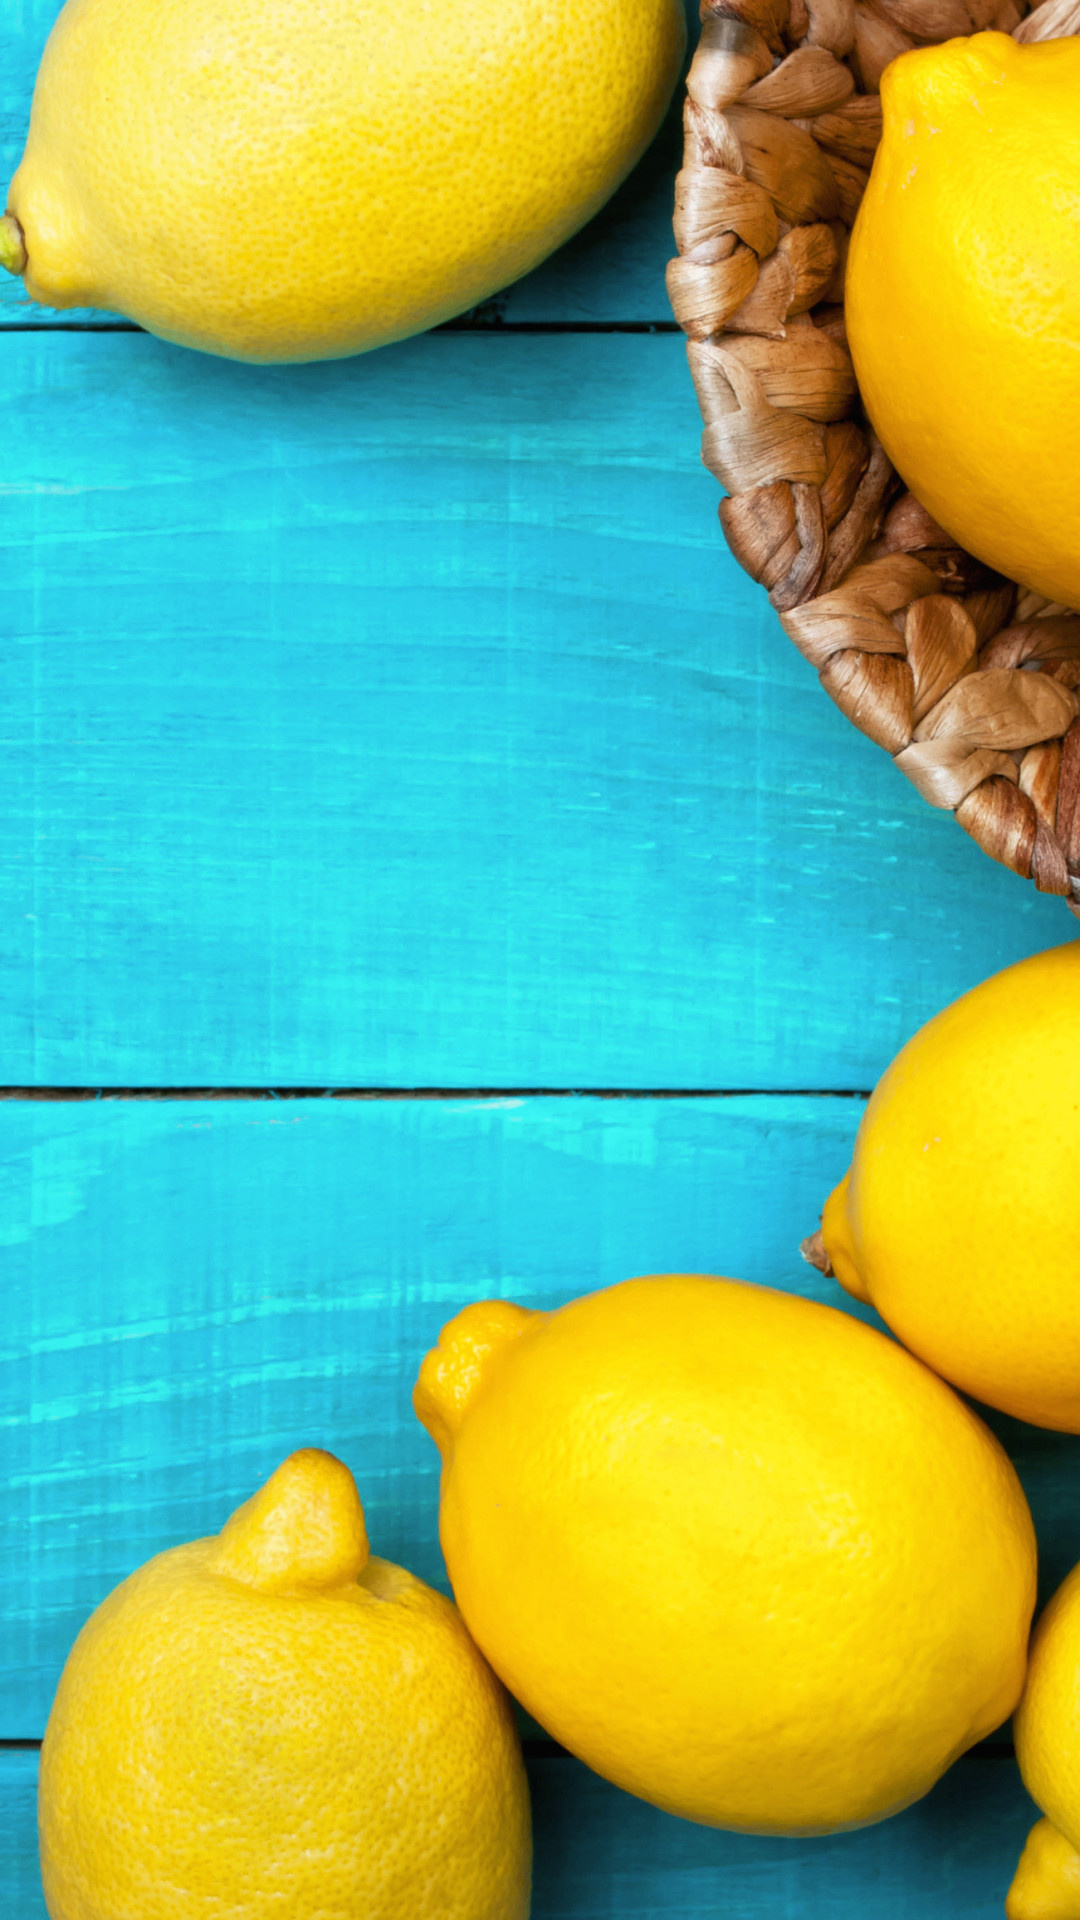 Lemon: An oval-shaped fruit that belong in the citrus family. 1080x1920 Full HD Wallpaper.